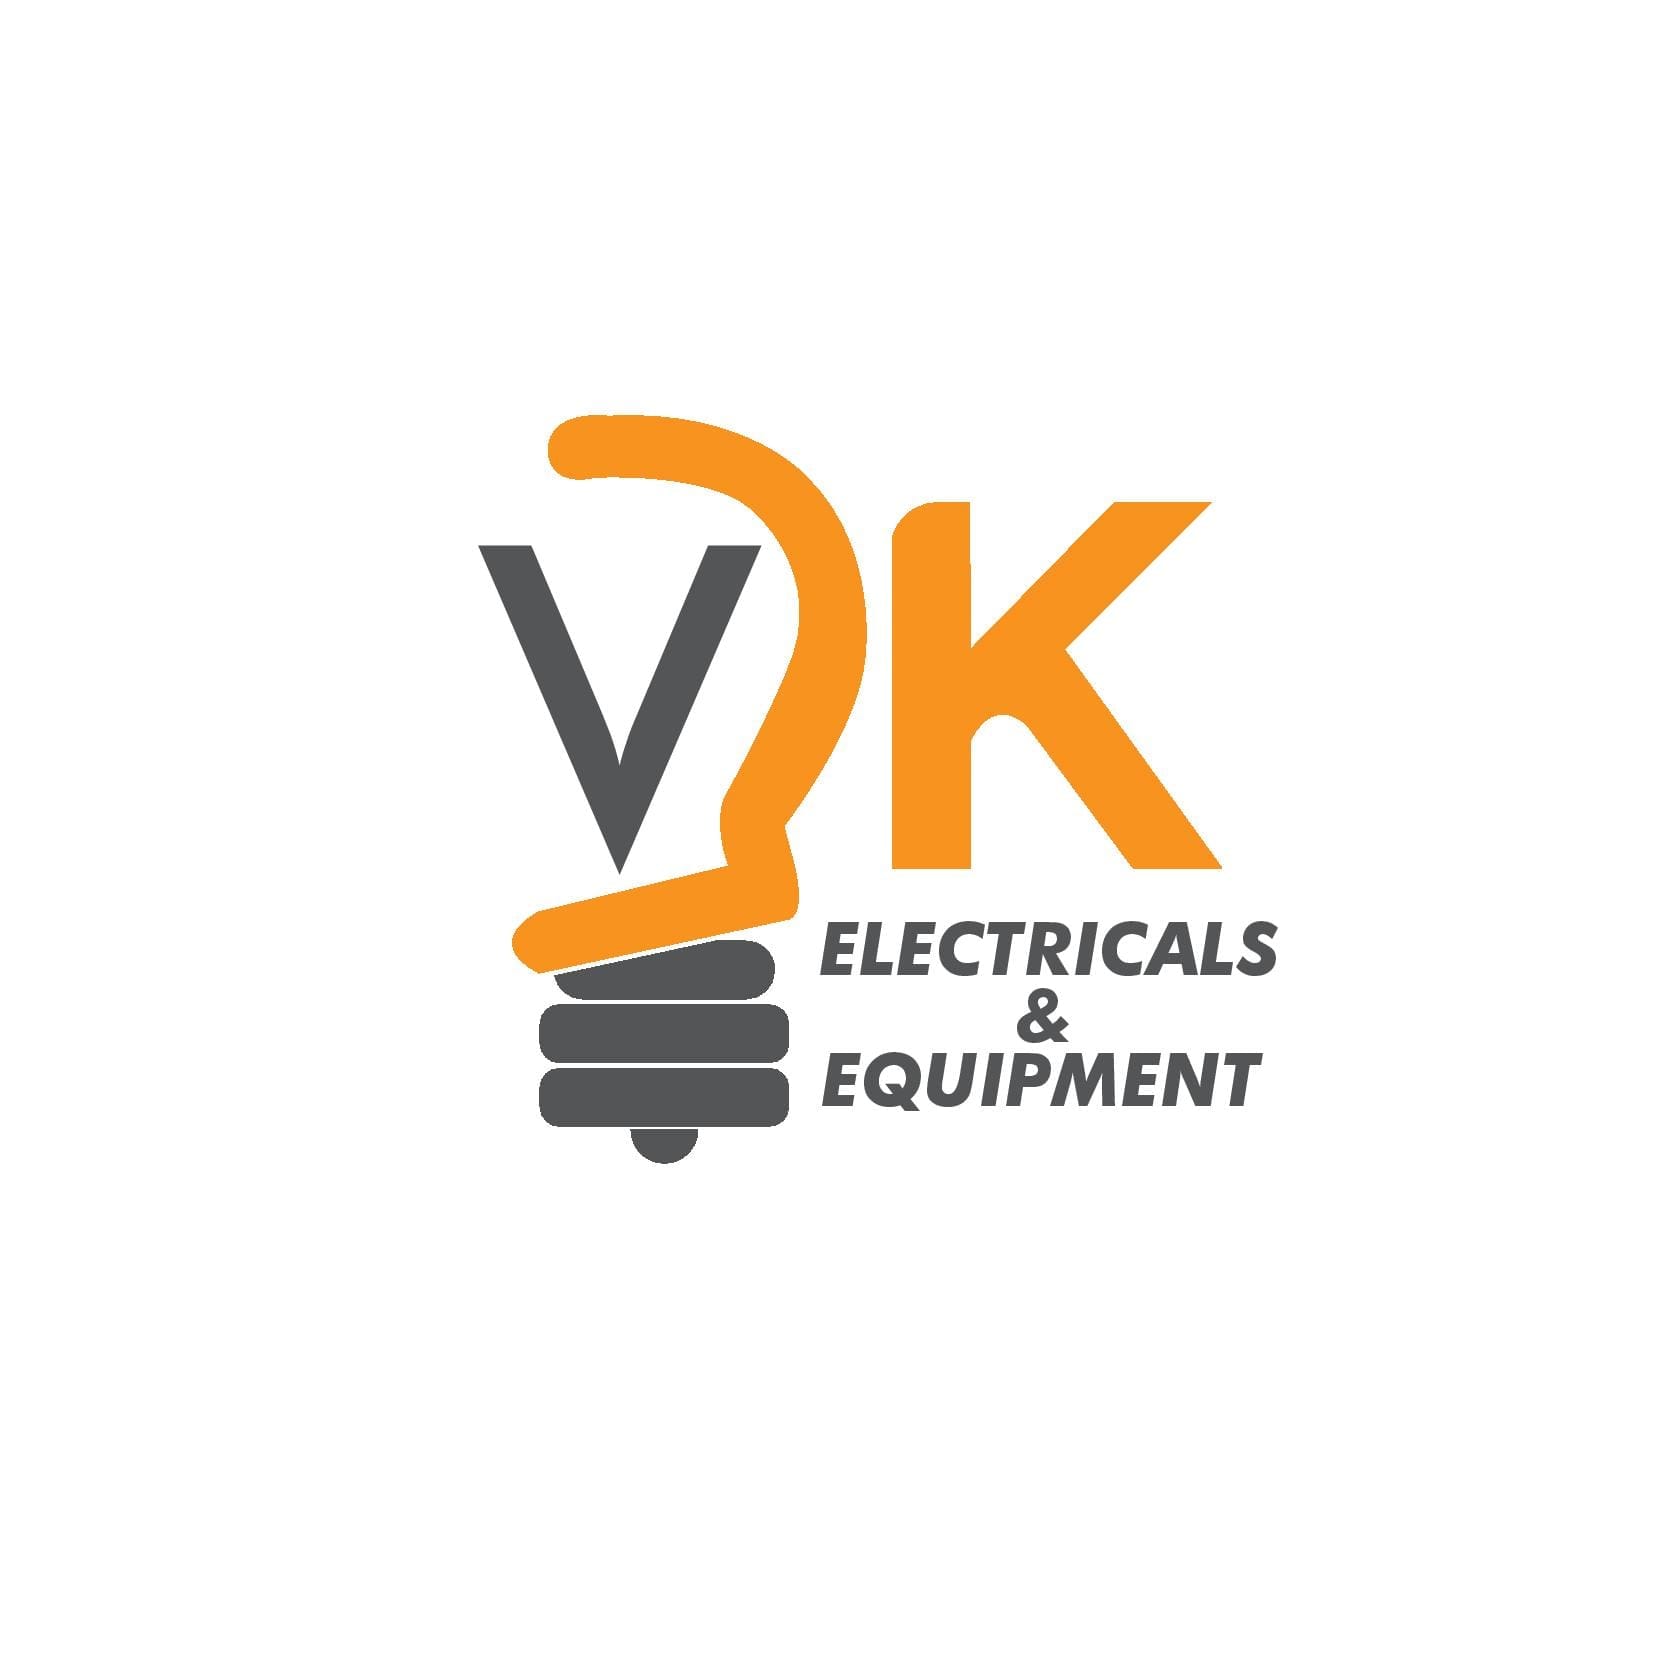 VK Electricals & Equipment